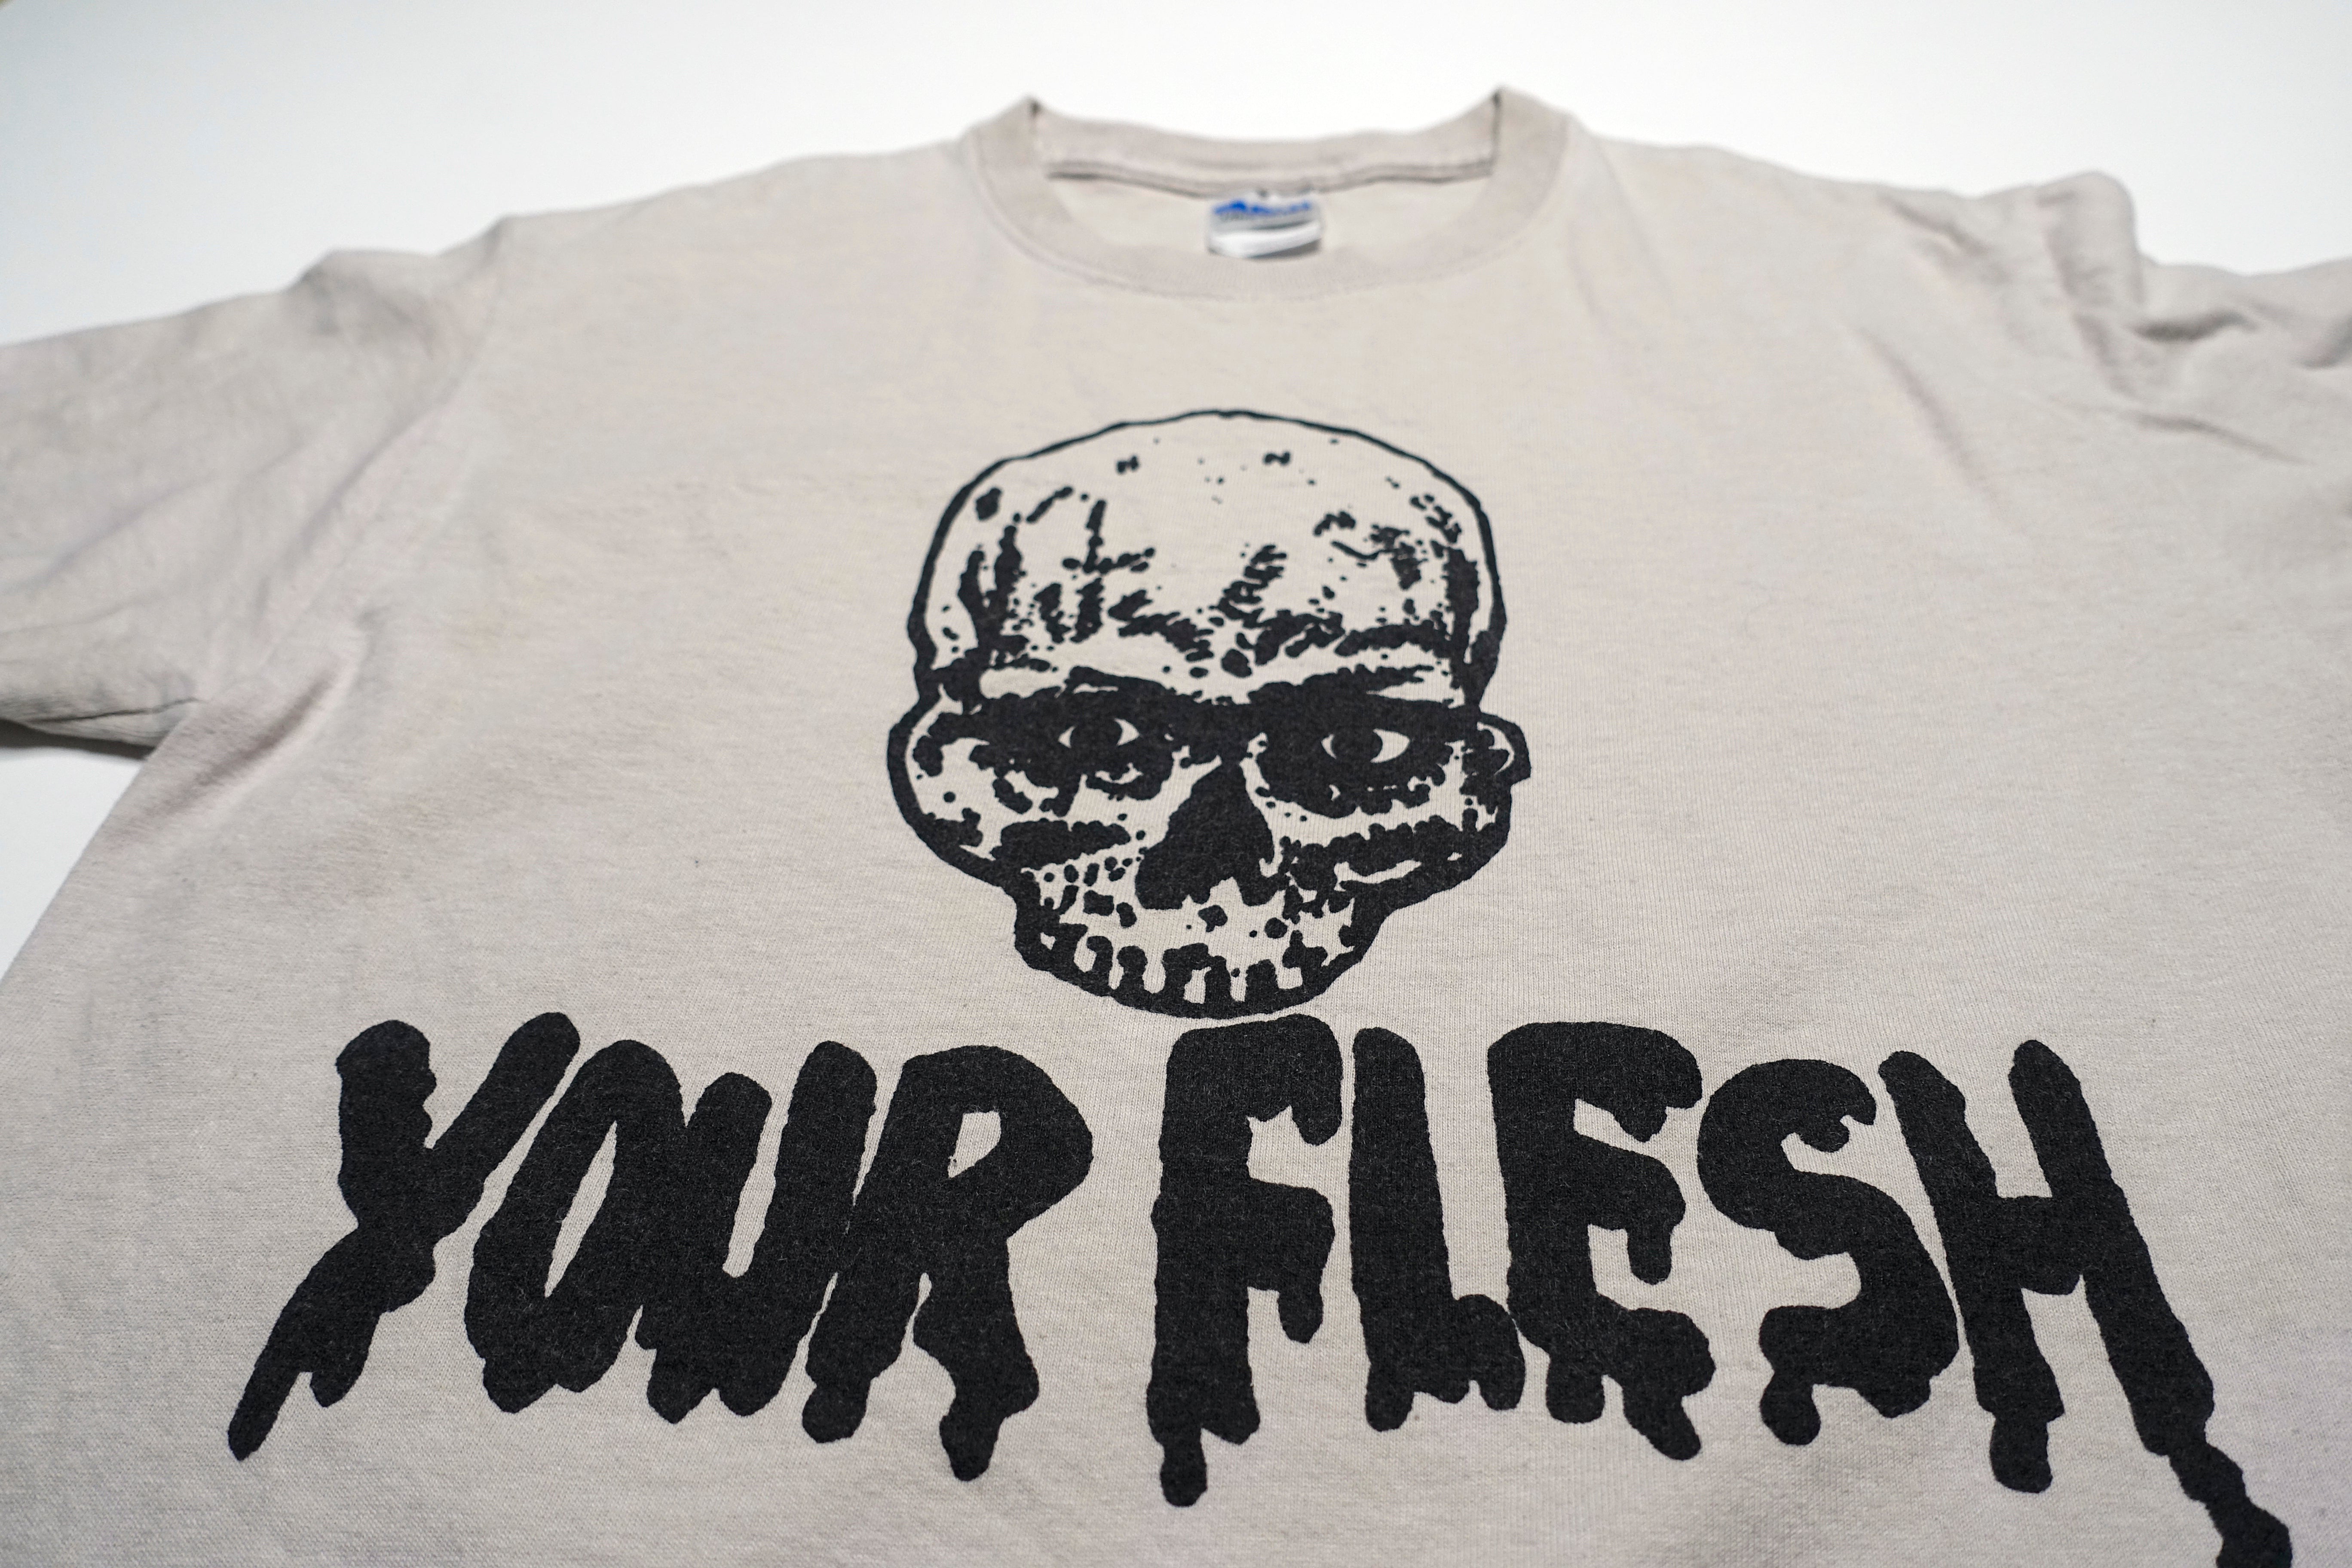 Your Flesh ‎– Skull Shirt Size Small